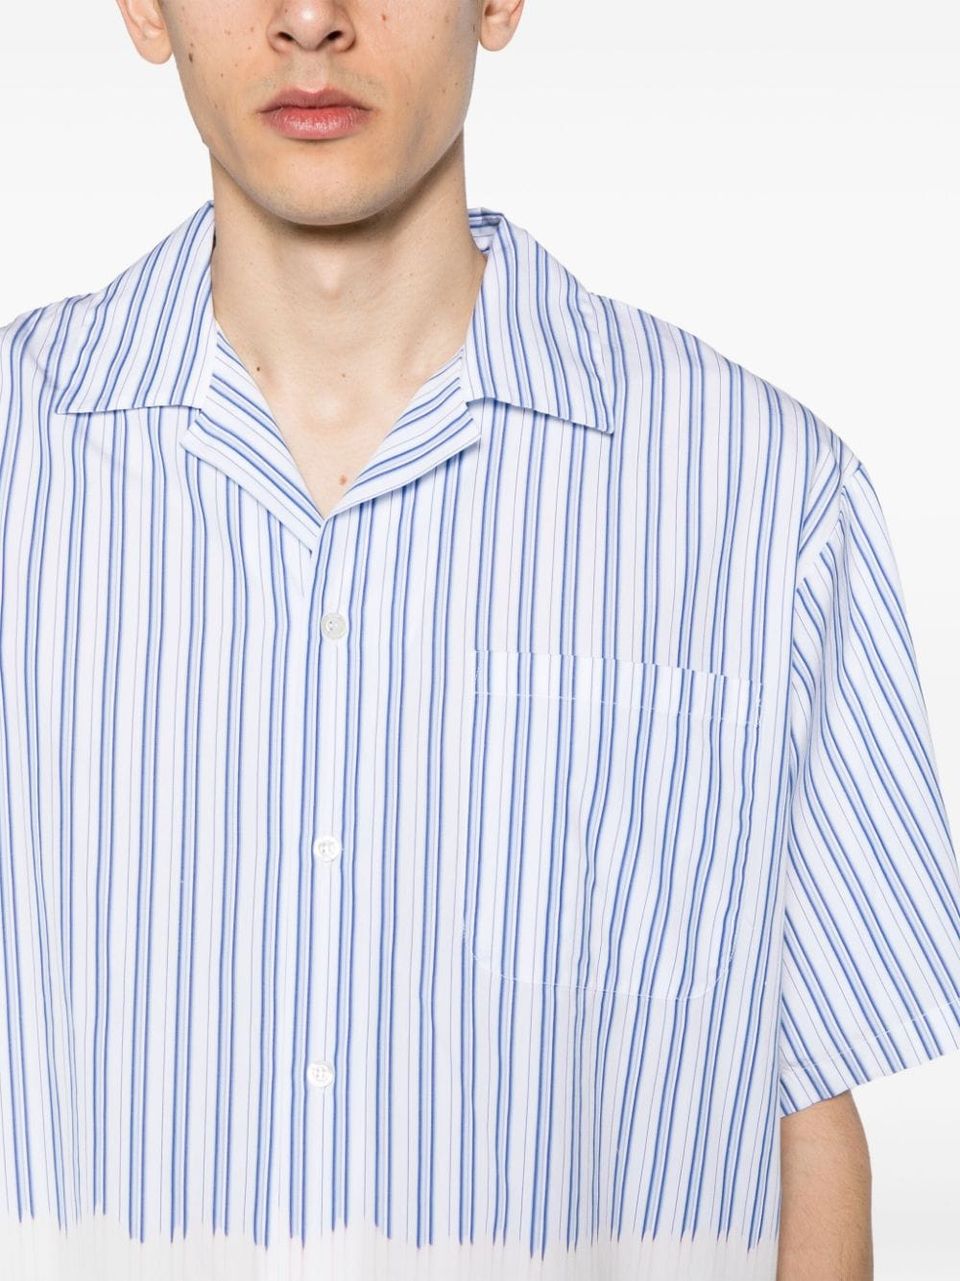 Pinstripe pattern shirt